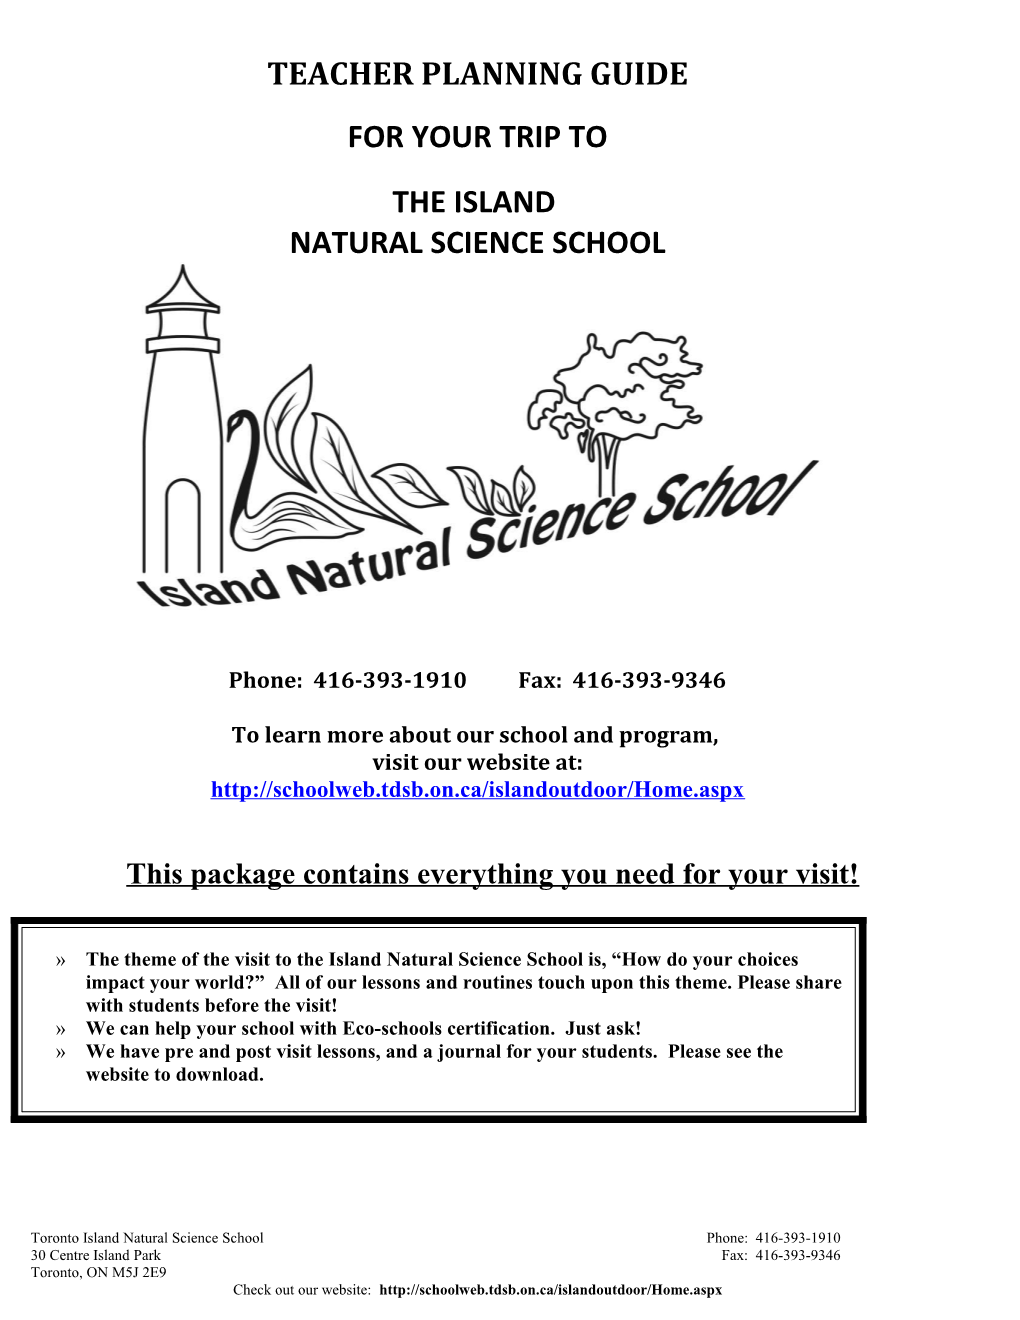 Toronto Island Trip Checklist for Teachers